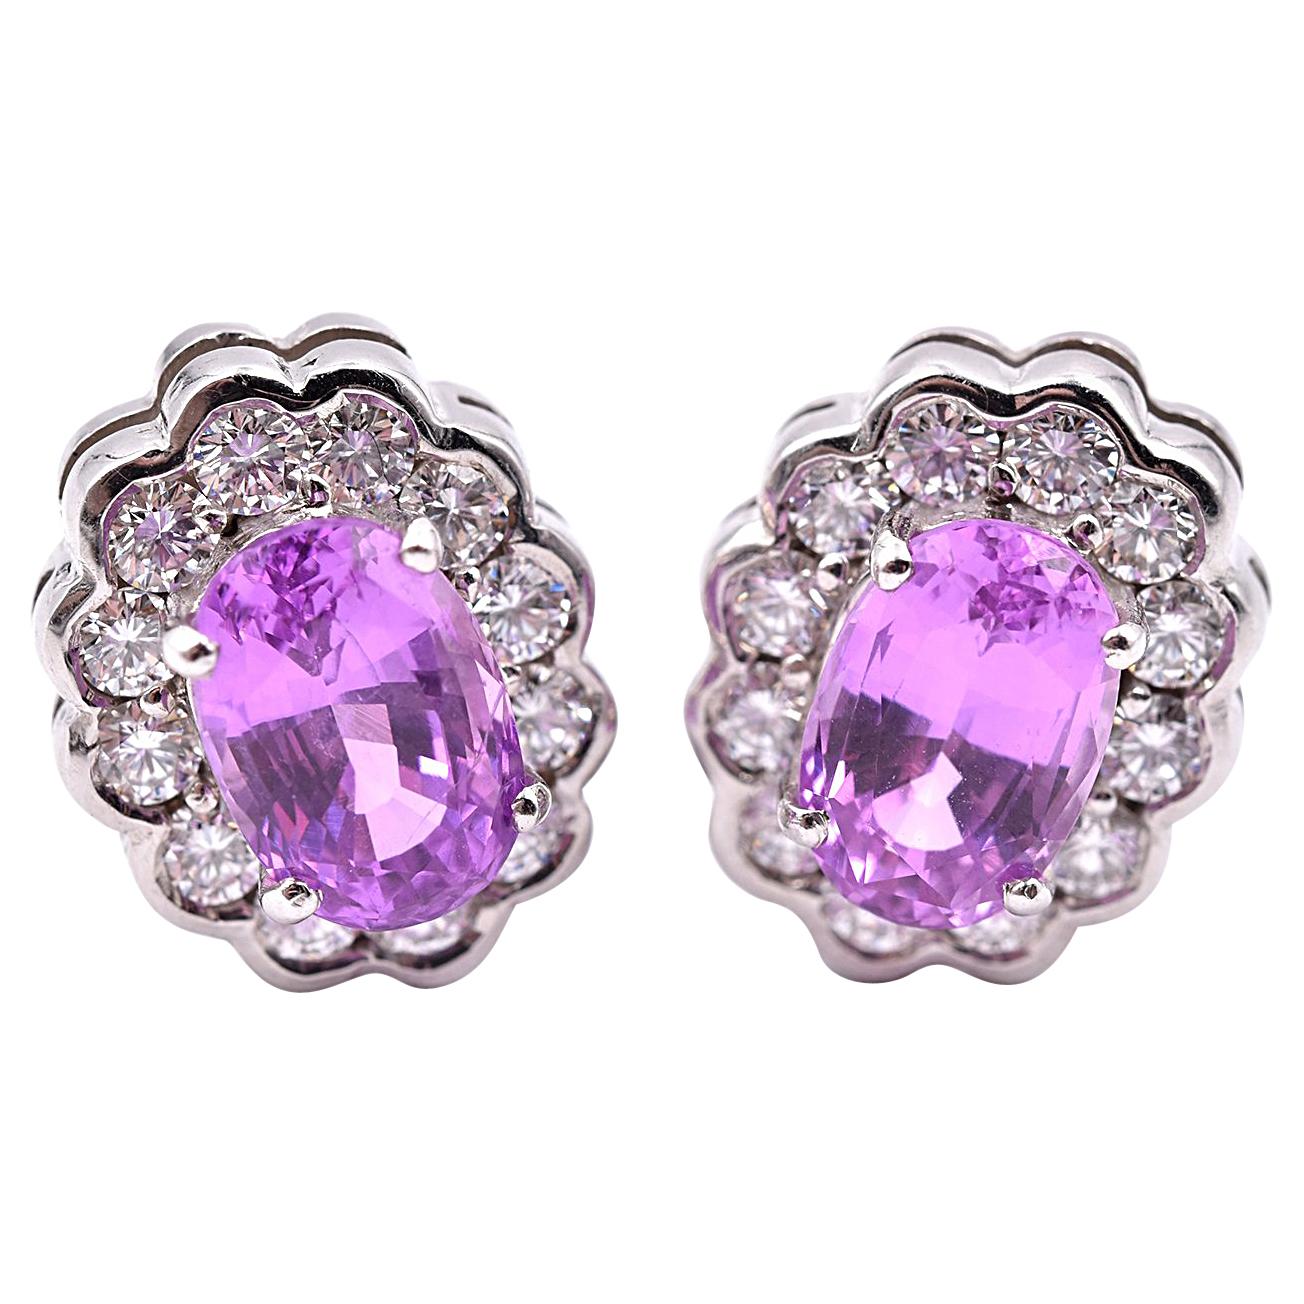 18 Karat White Gold Diamond and Pink Sapphire Earrings